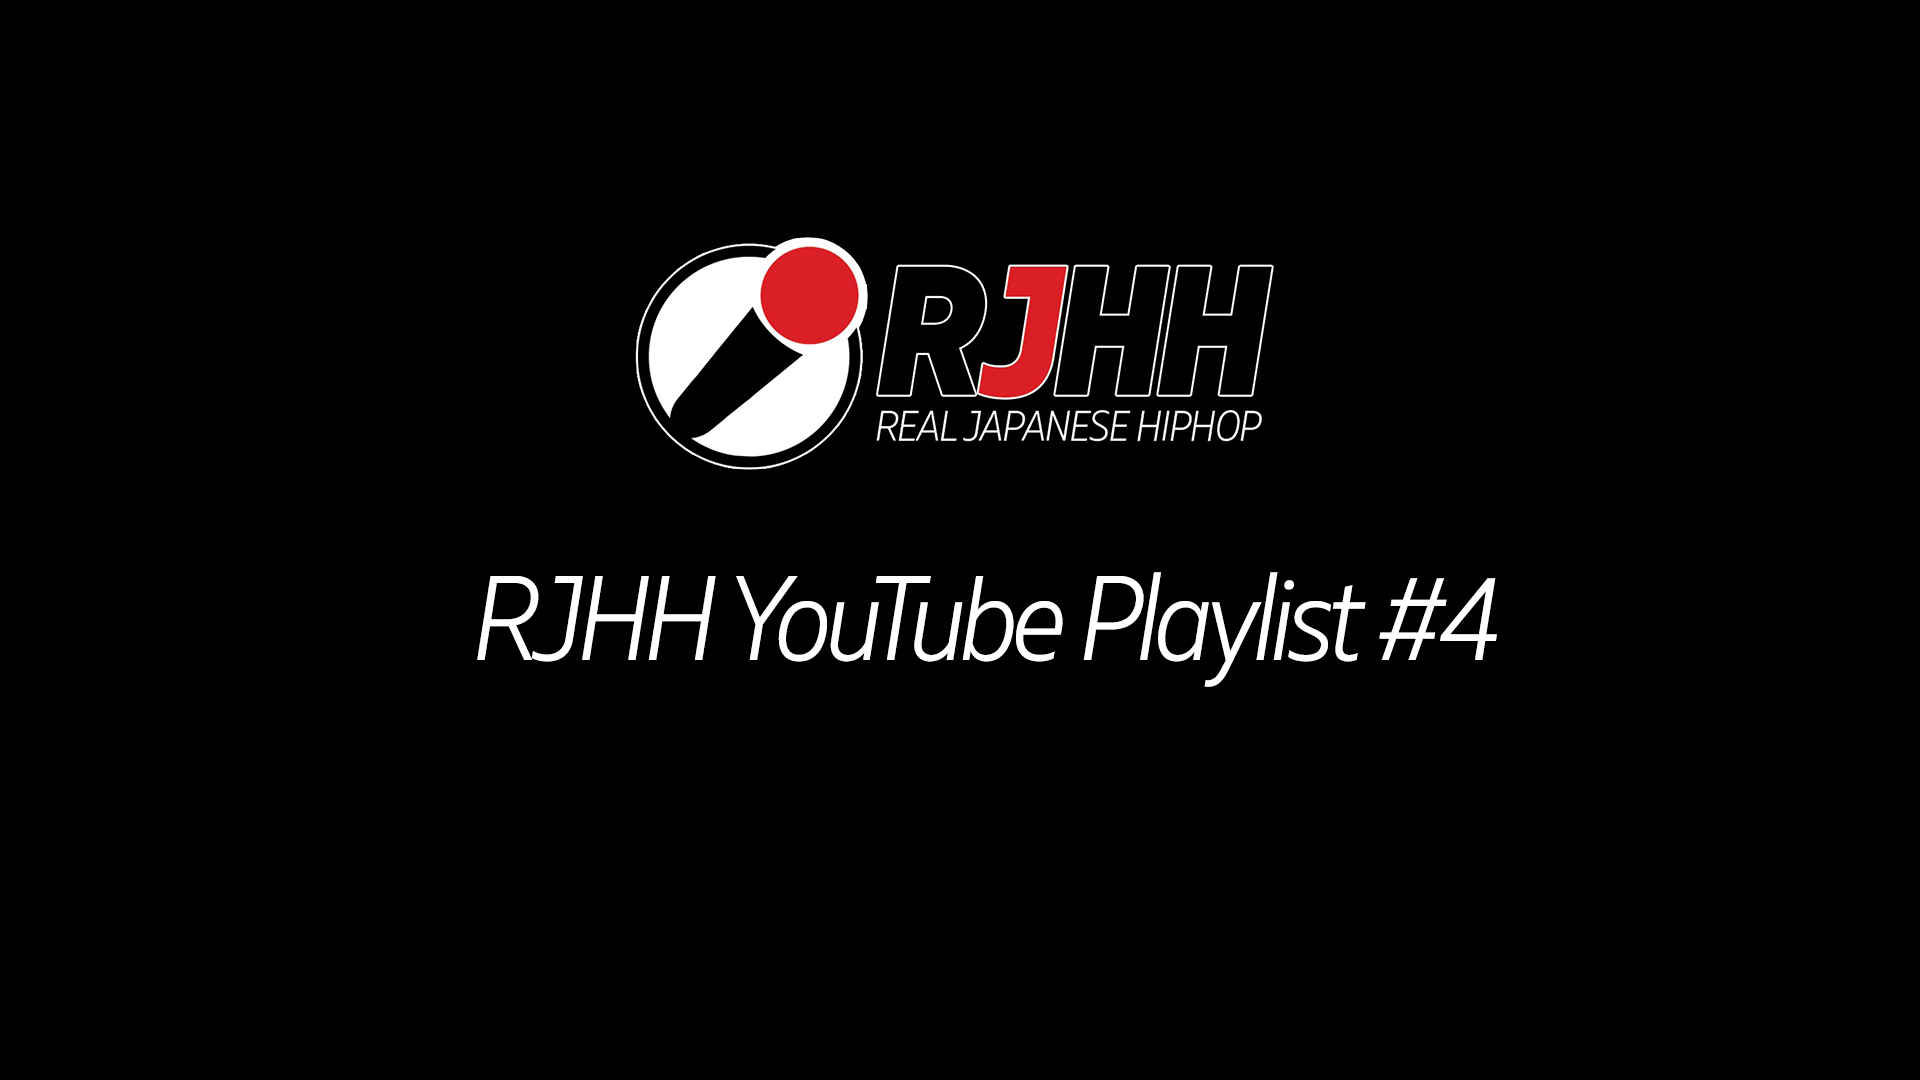 RJHH YouTube Playlist #4